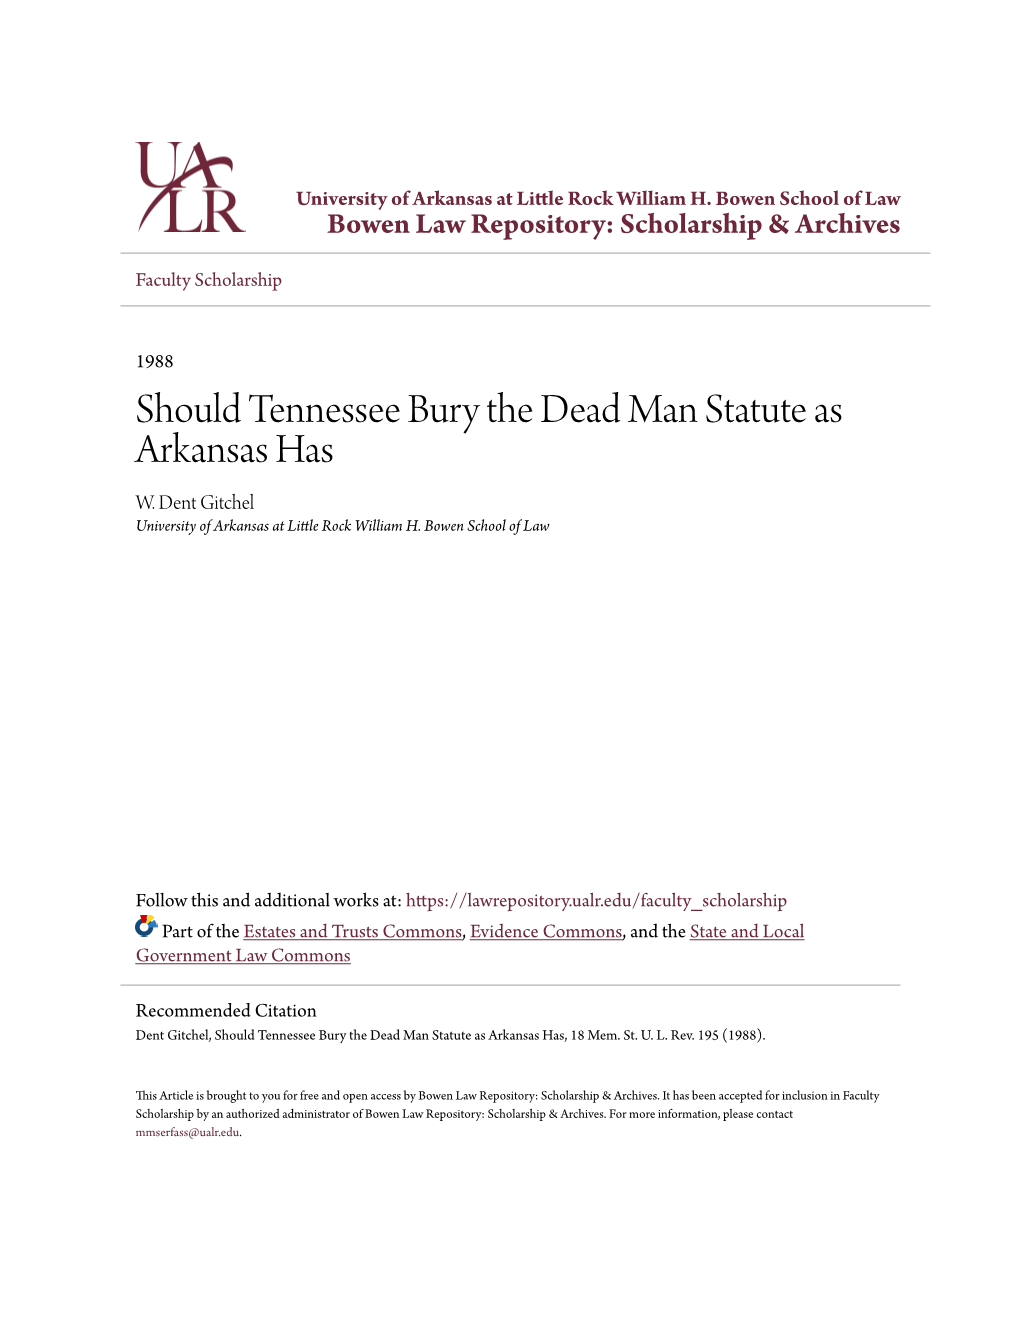 Should Tennessee Bury the Dead Man Statute As Arkansas Has W